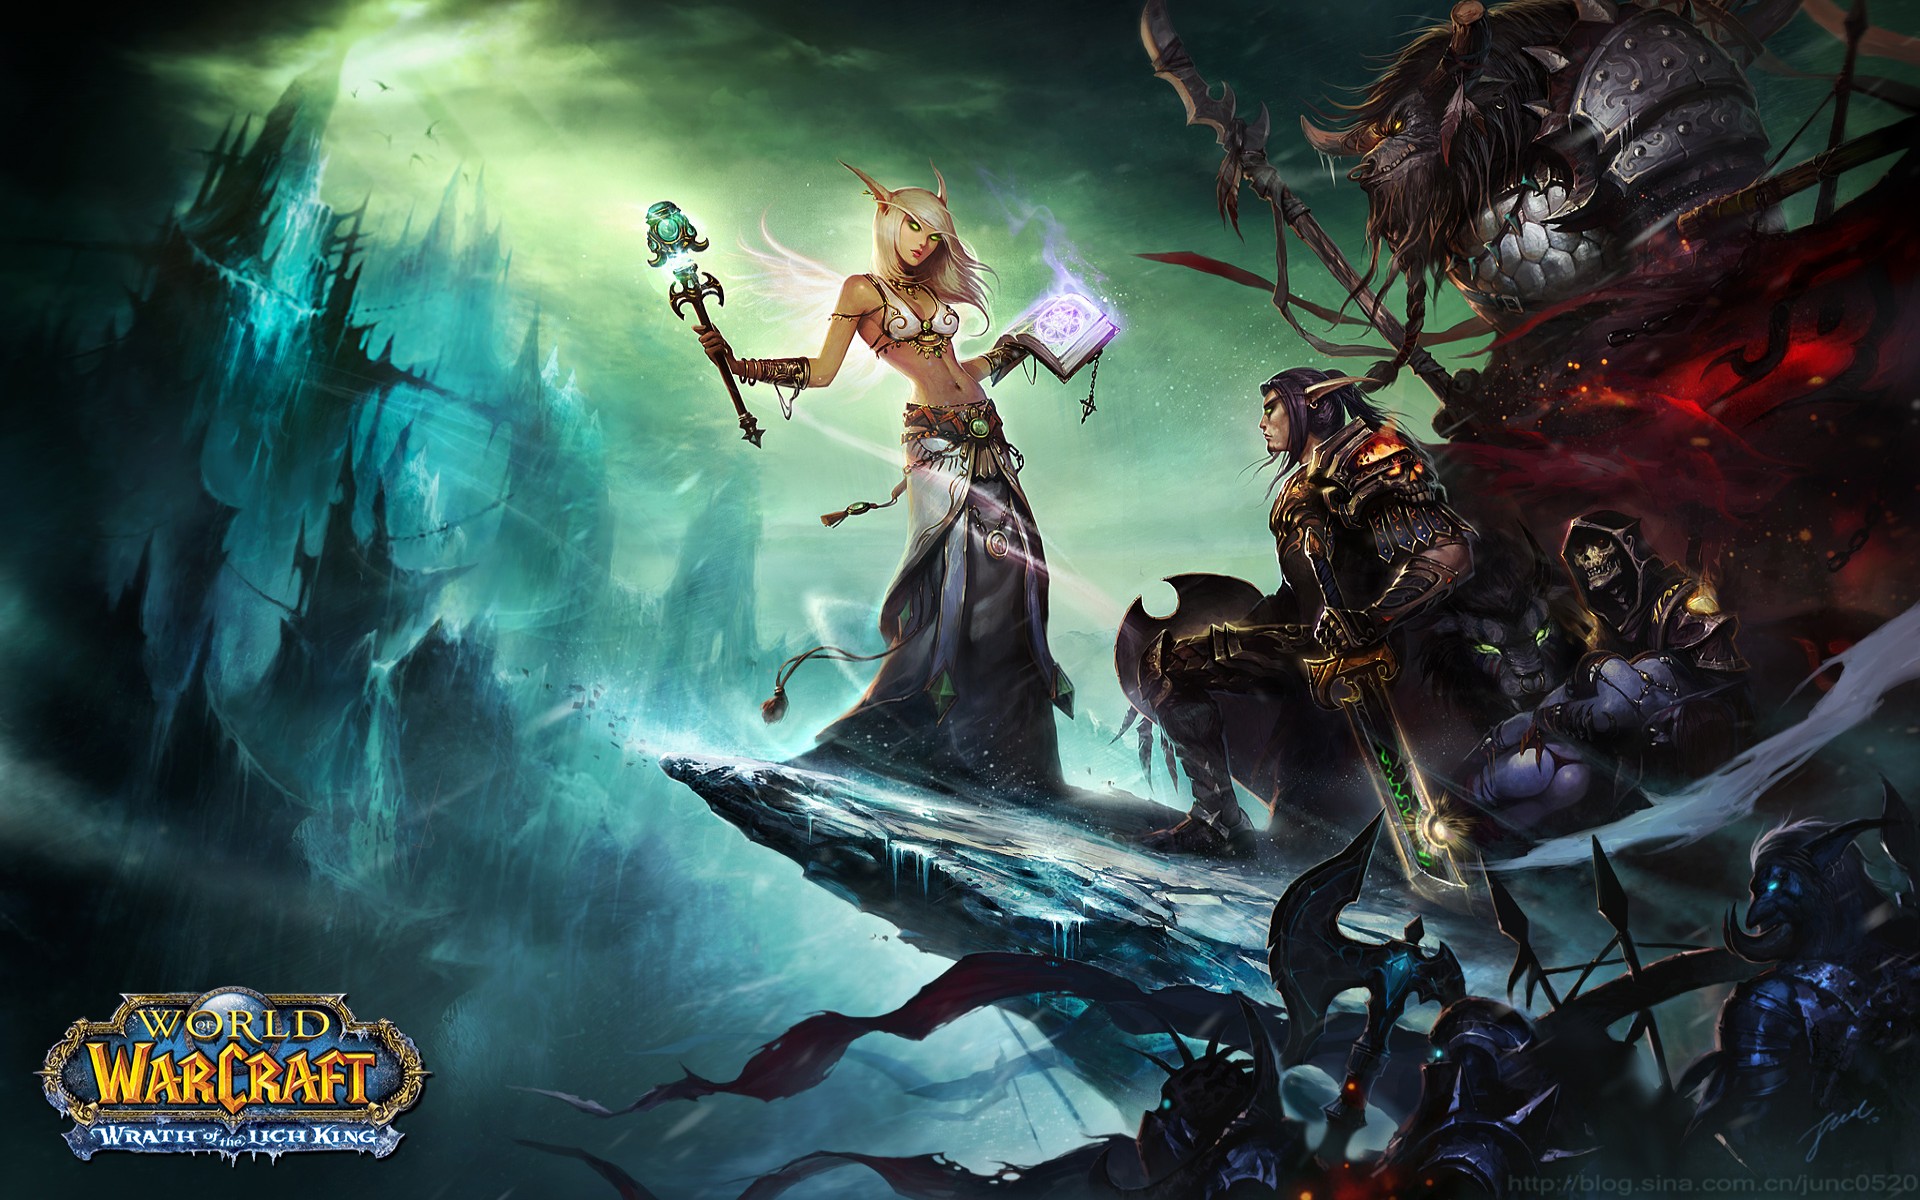 world of warcraft - World Warcraft Wrath Mich Kings